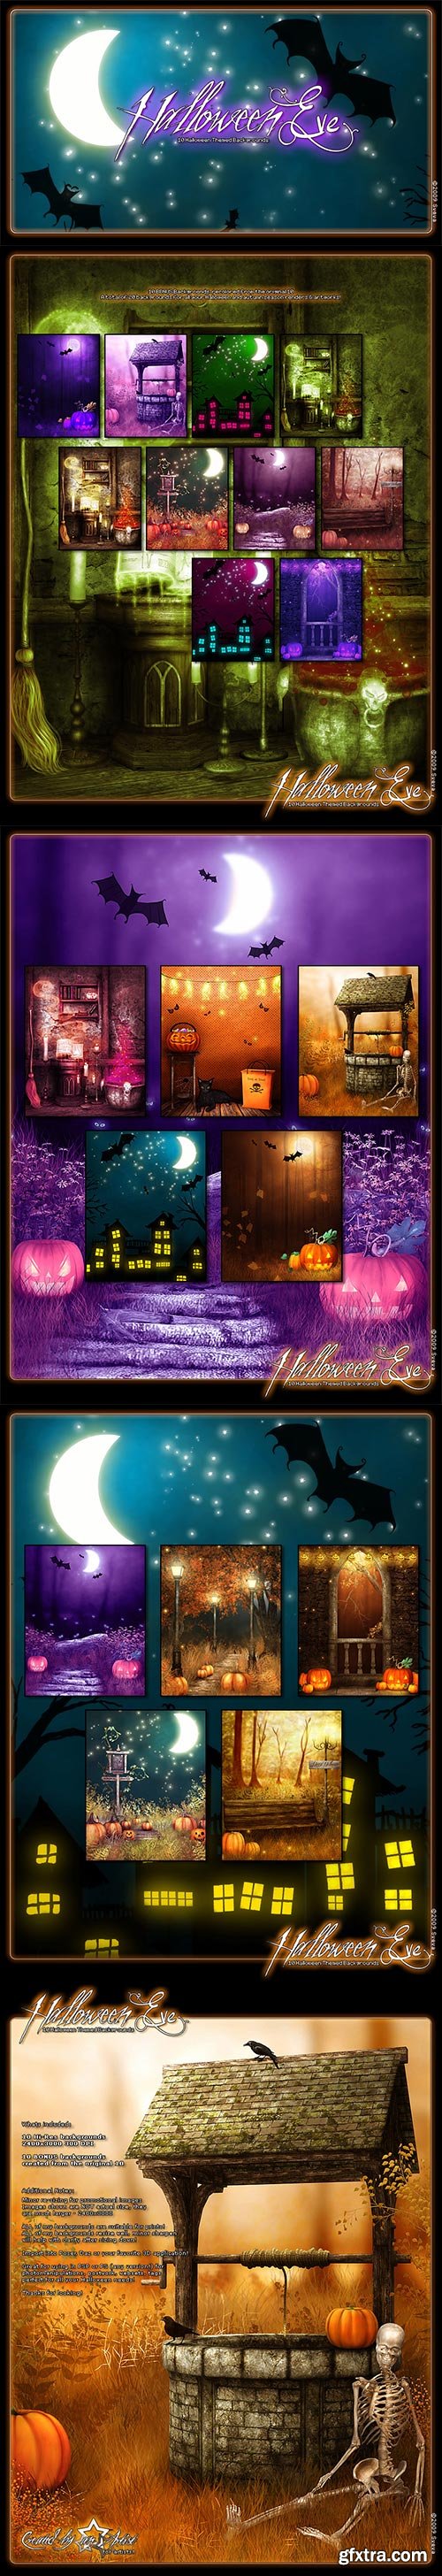 Halloween Eve Backgrounds 20xJPG